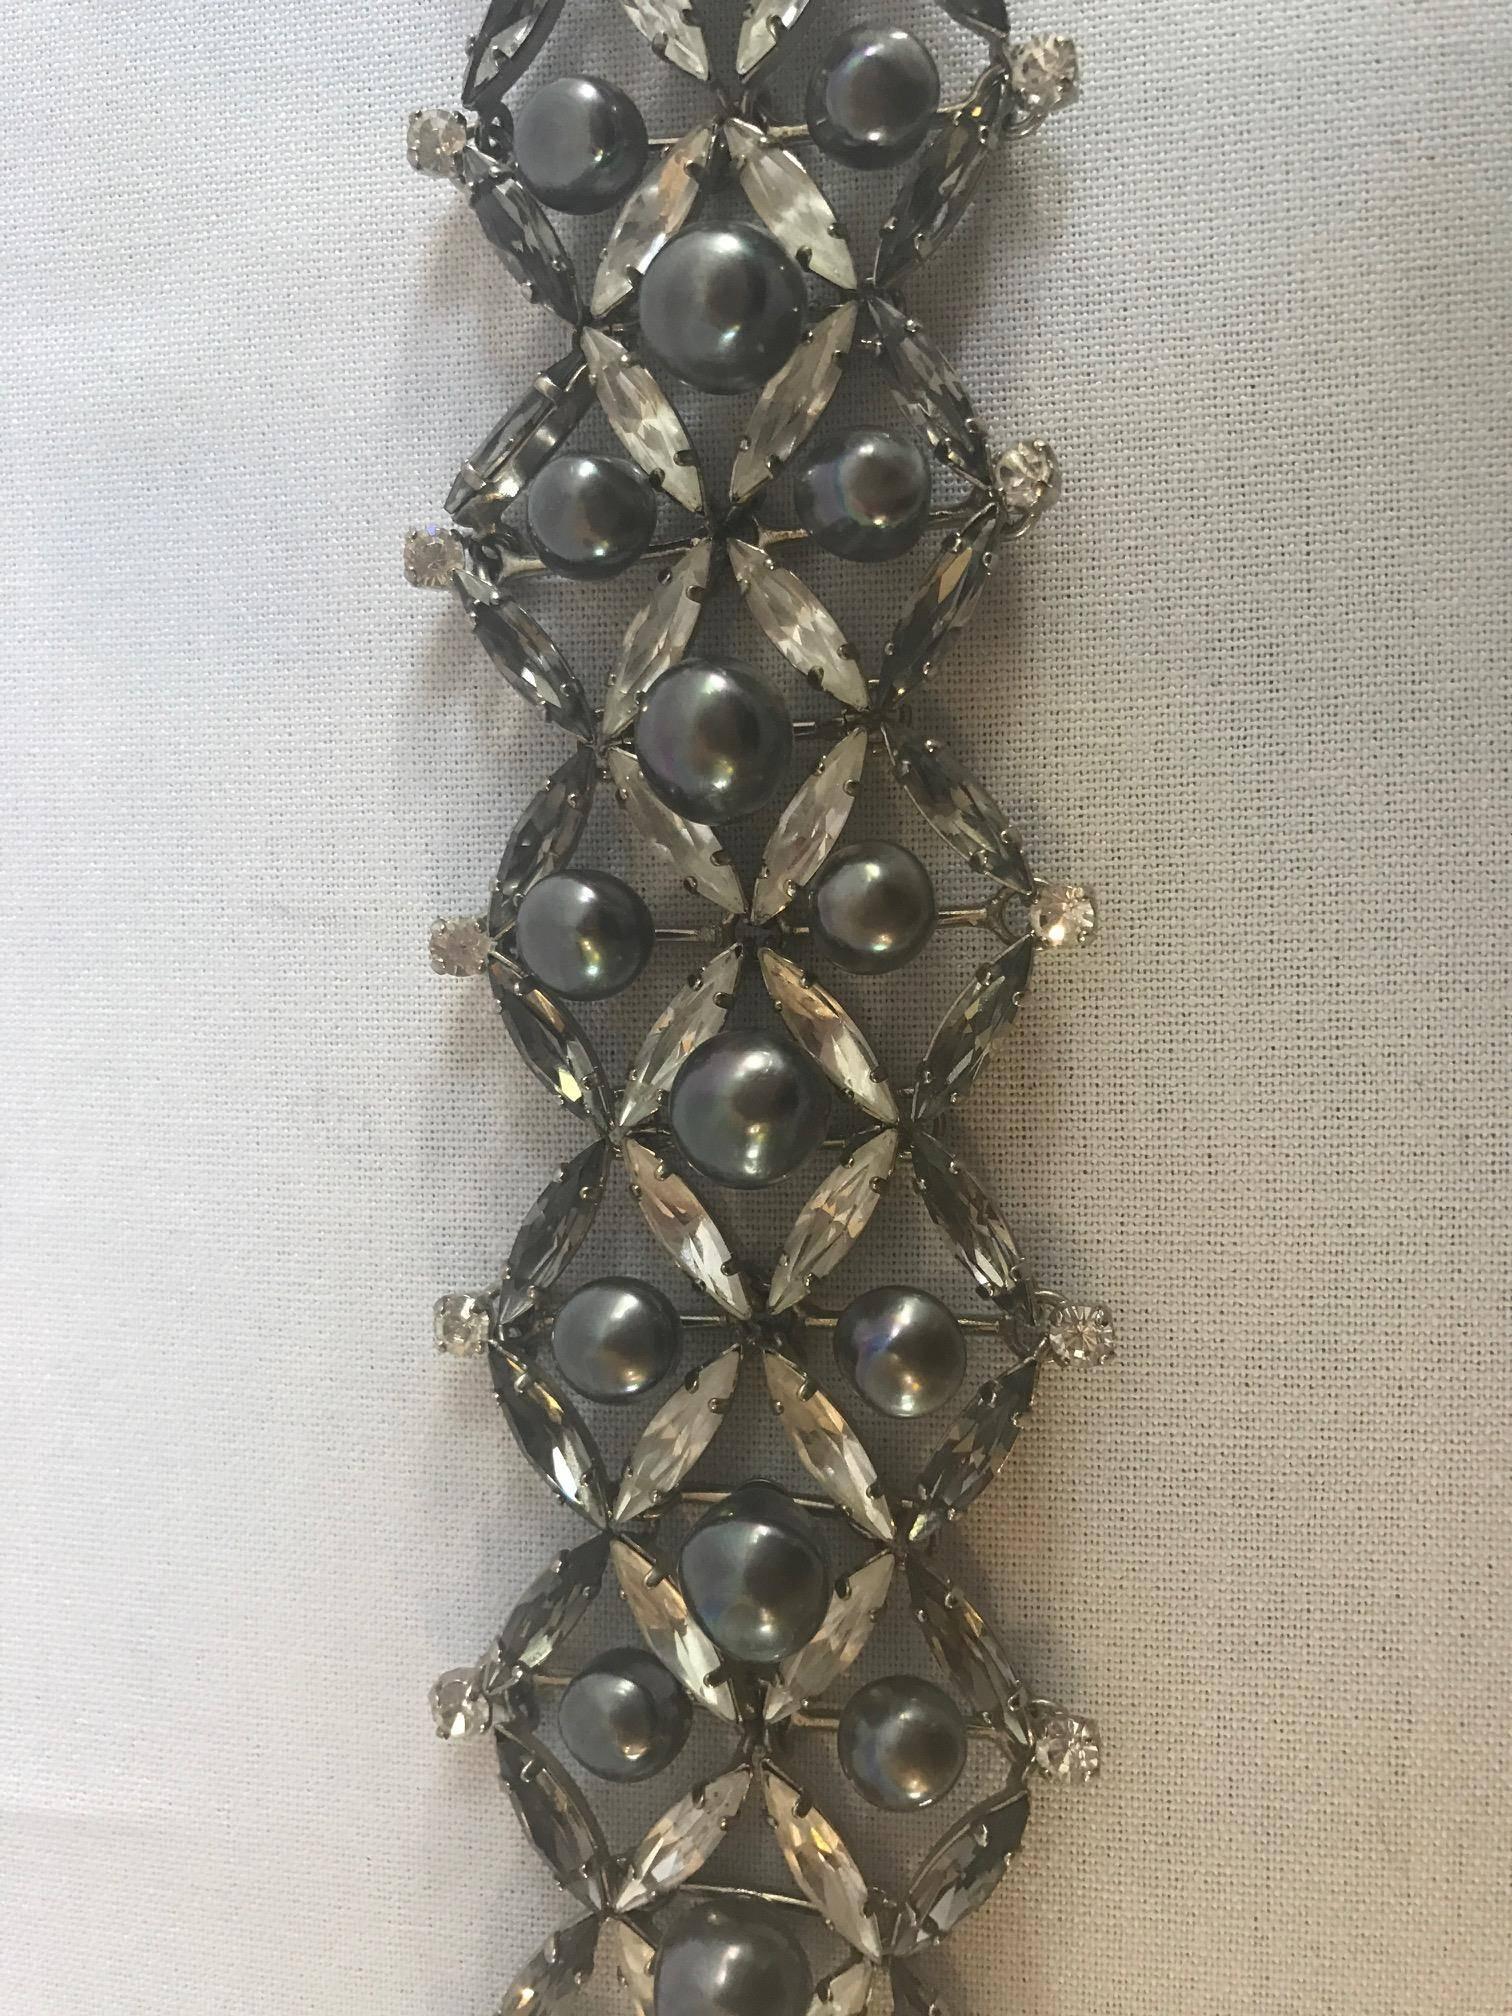 Beautiful rare Daniel Swarovski crystal and black bead pearls bracelet. Another stunner original by Daniel Swarovski bracelet!